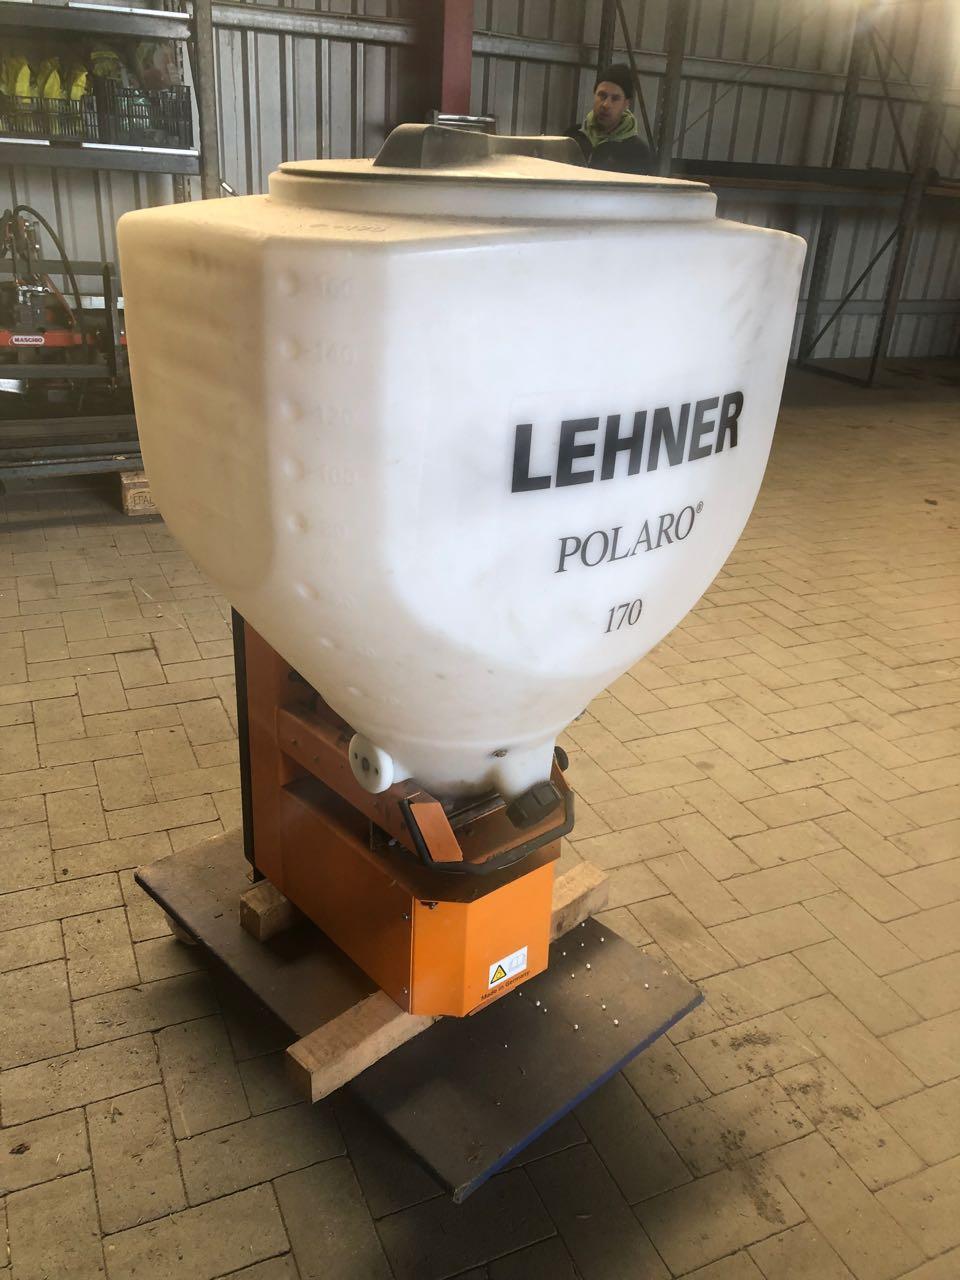  Lehner Polaro 170